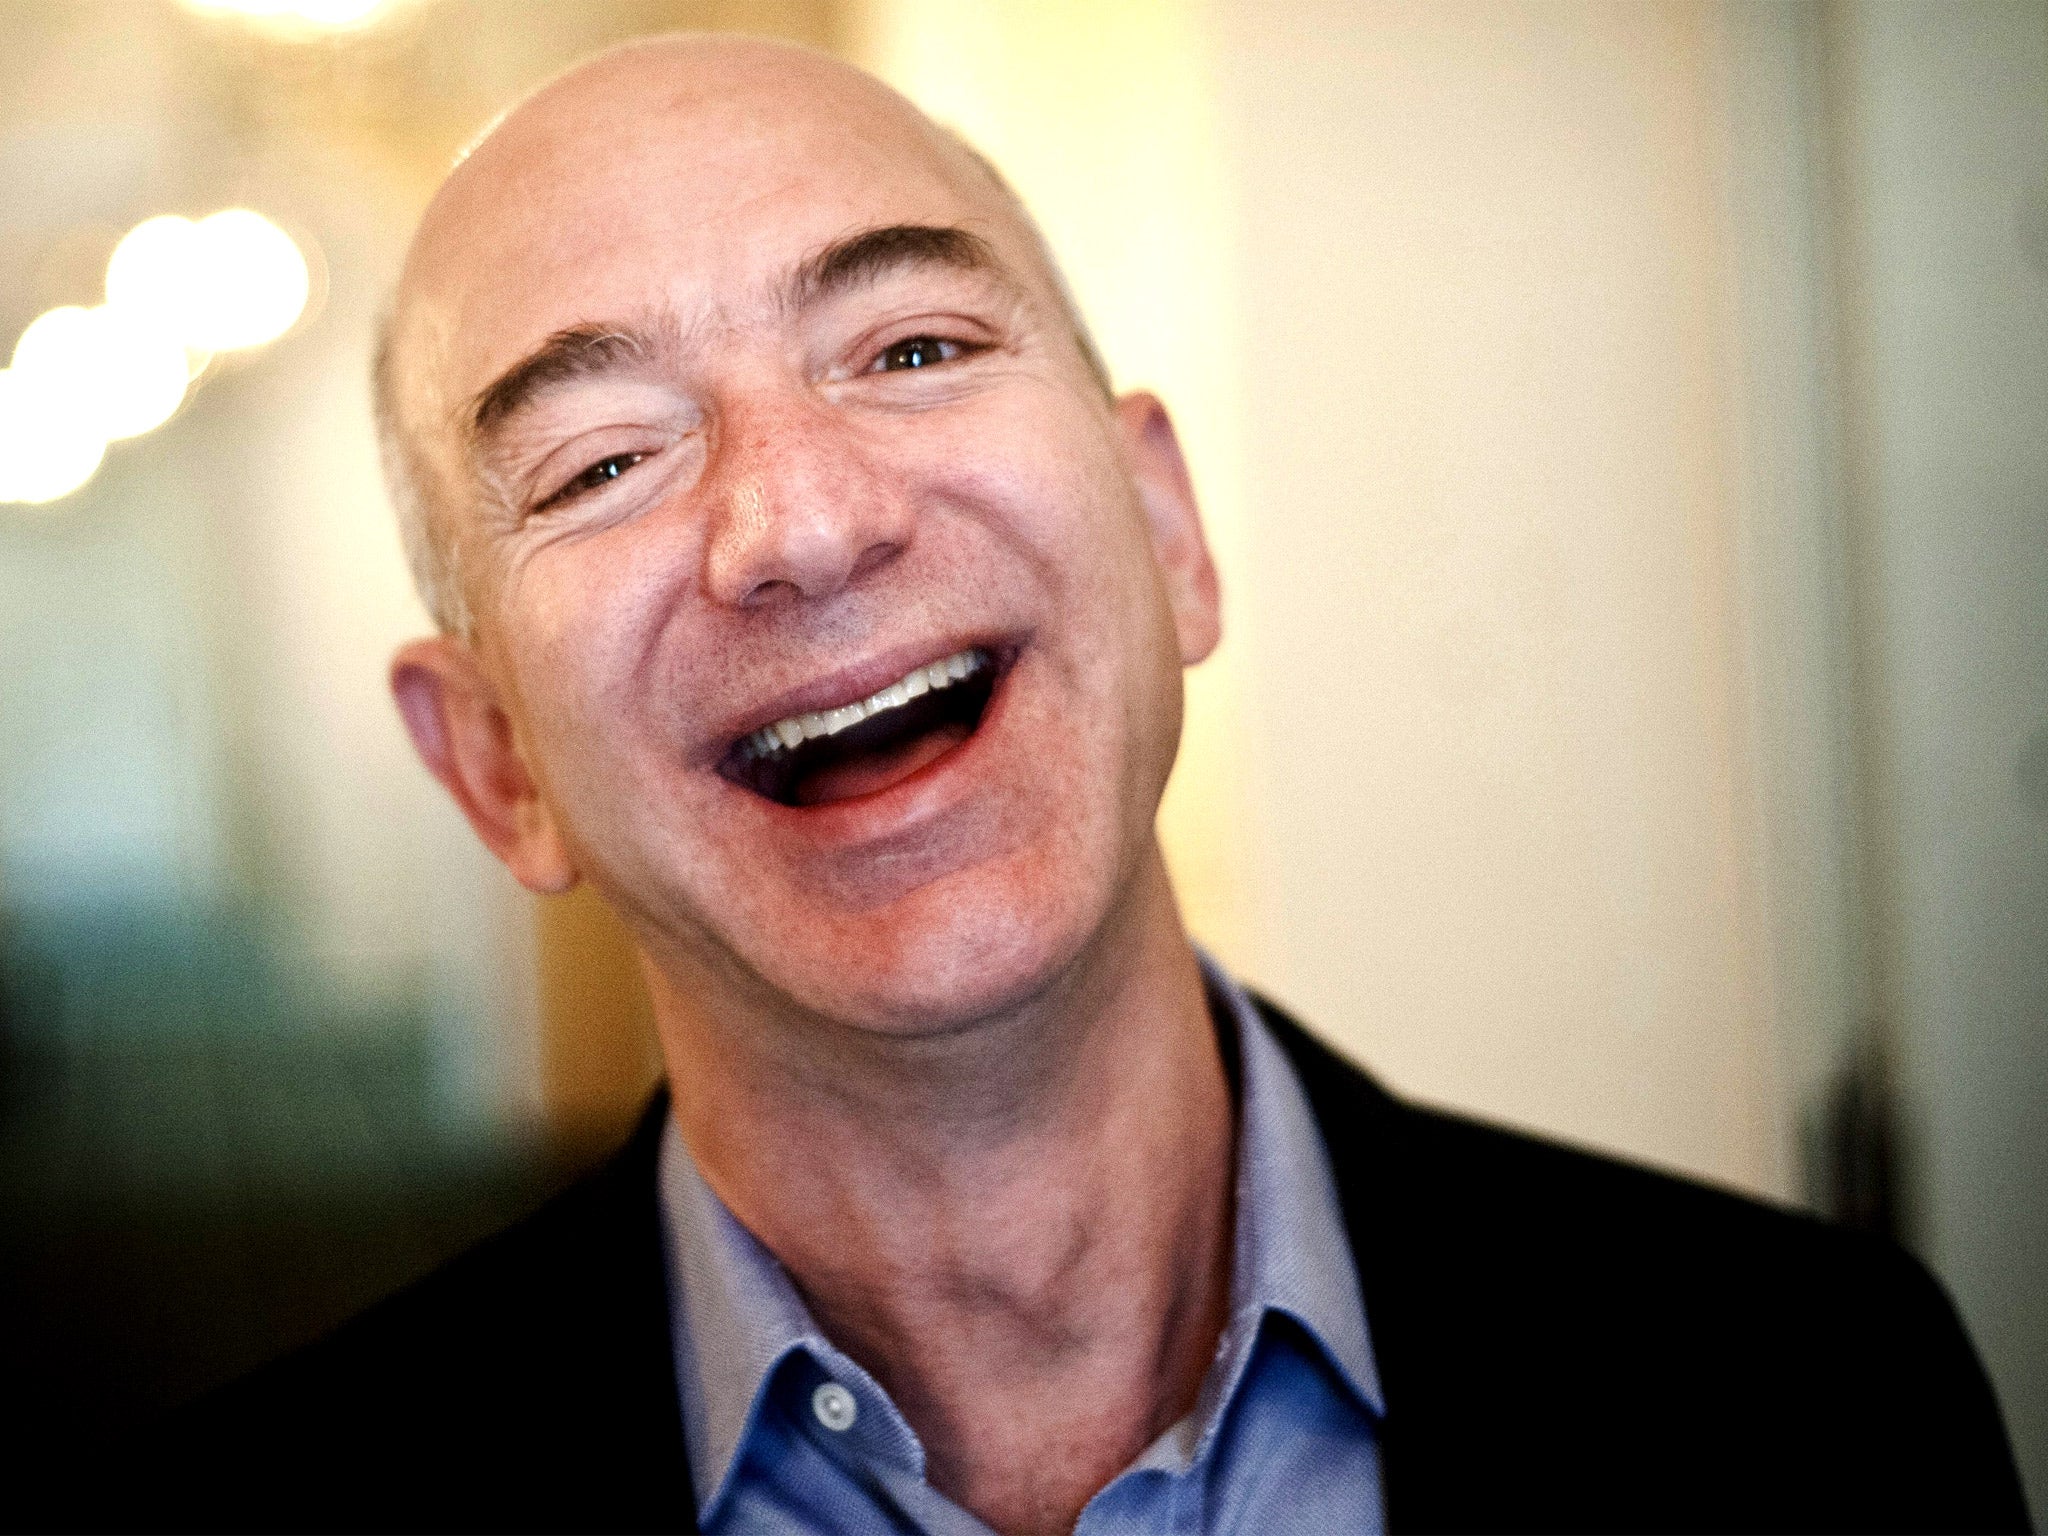 Jeff Bezos has a personal fortune of $23.2 billion